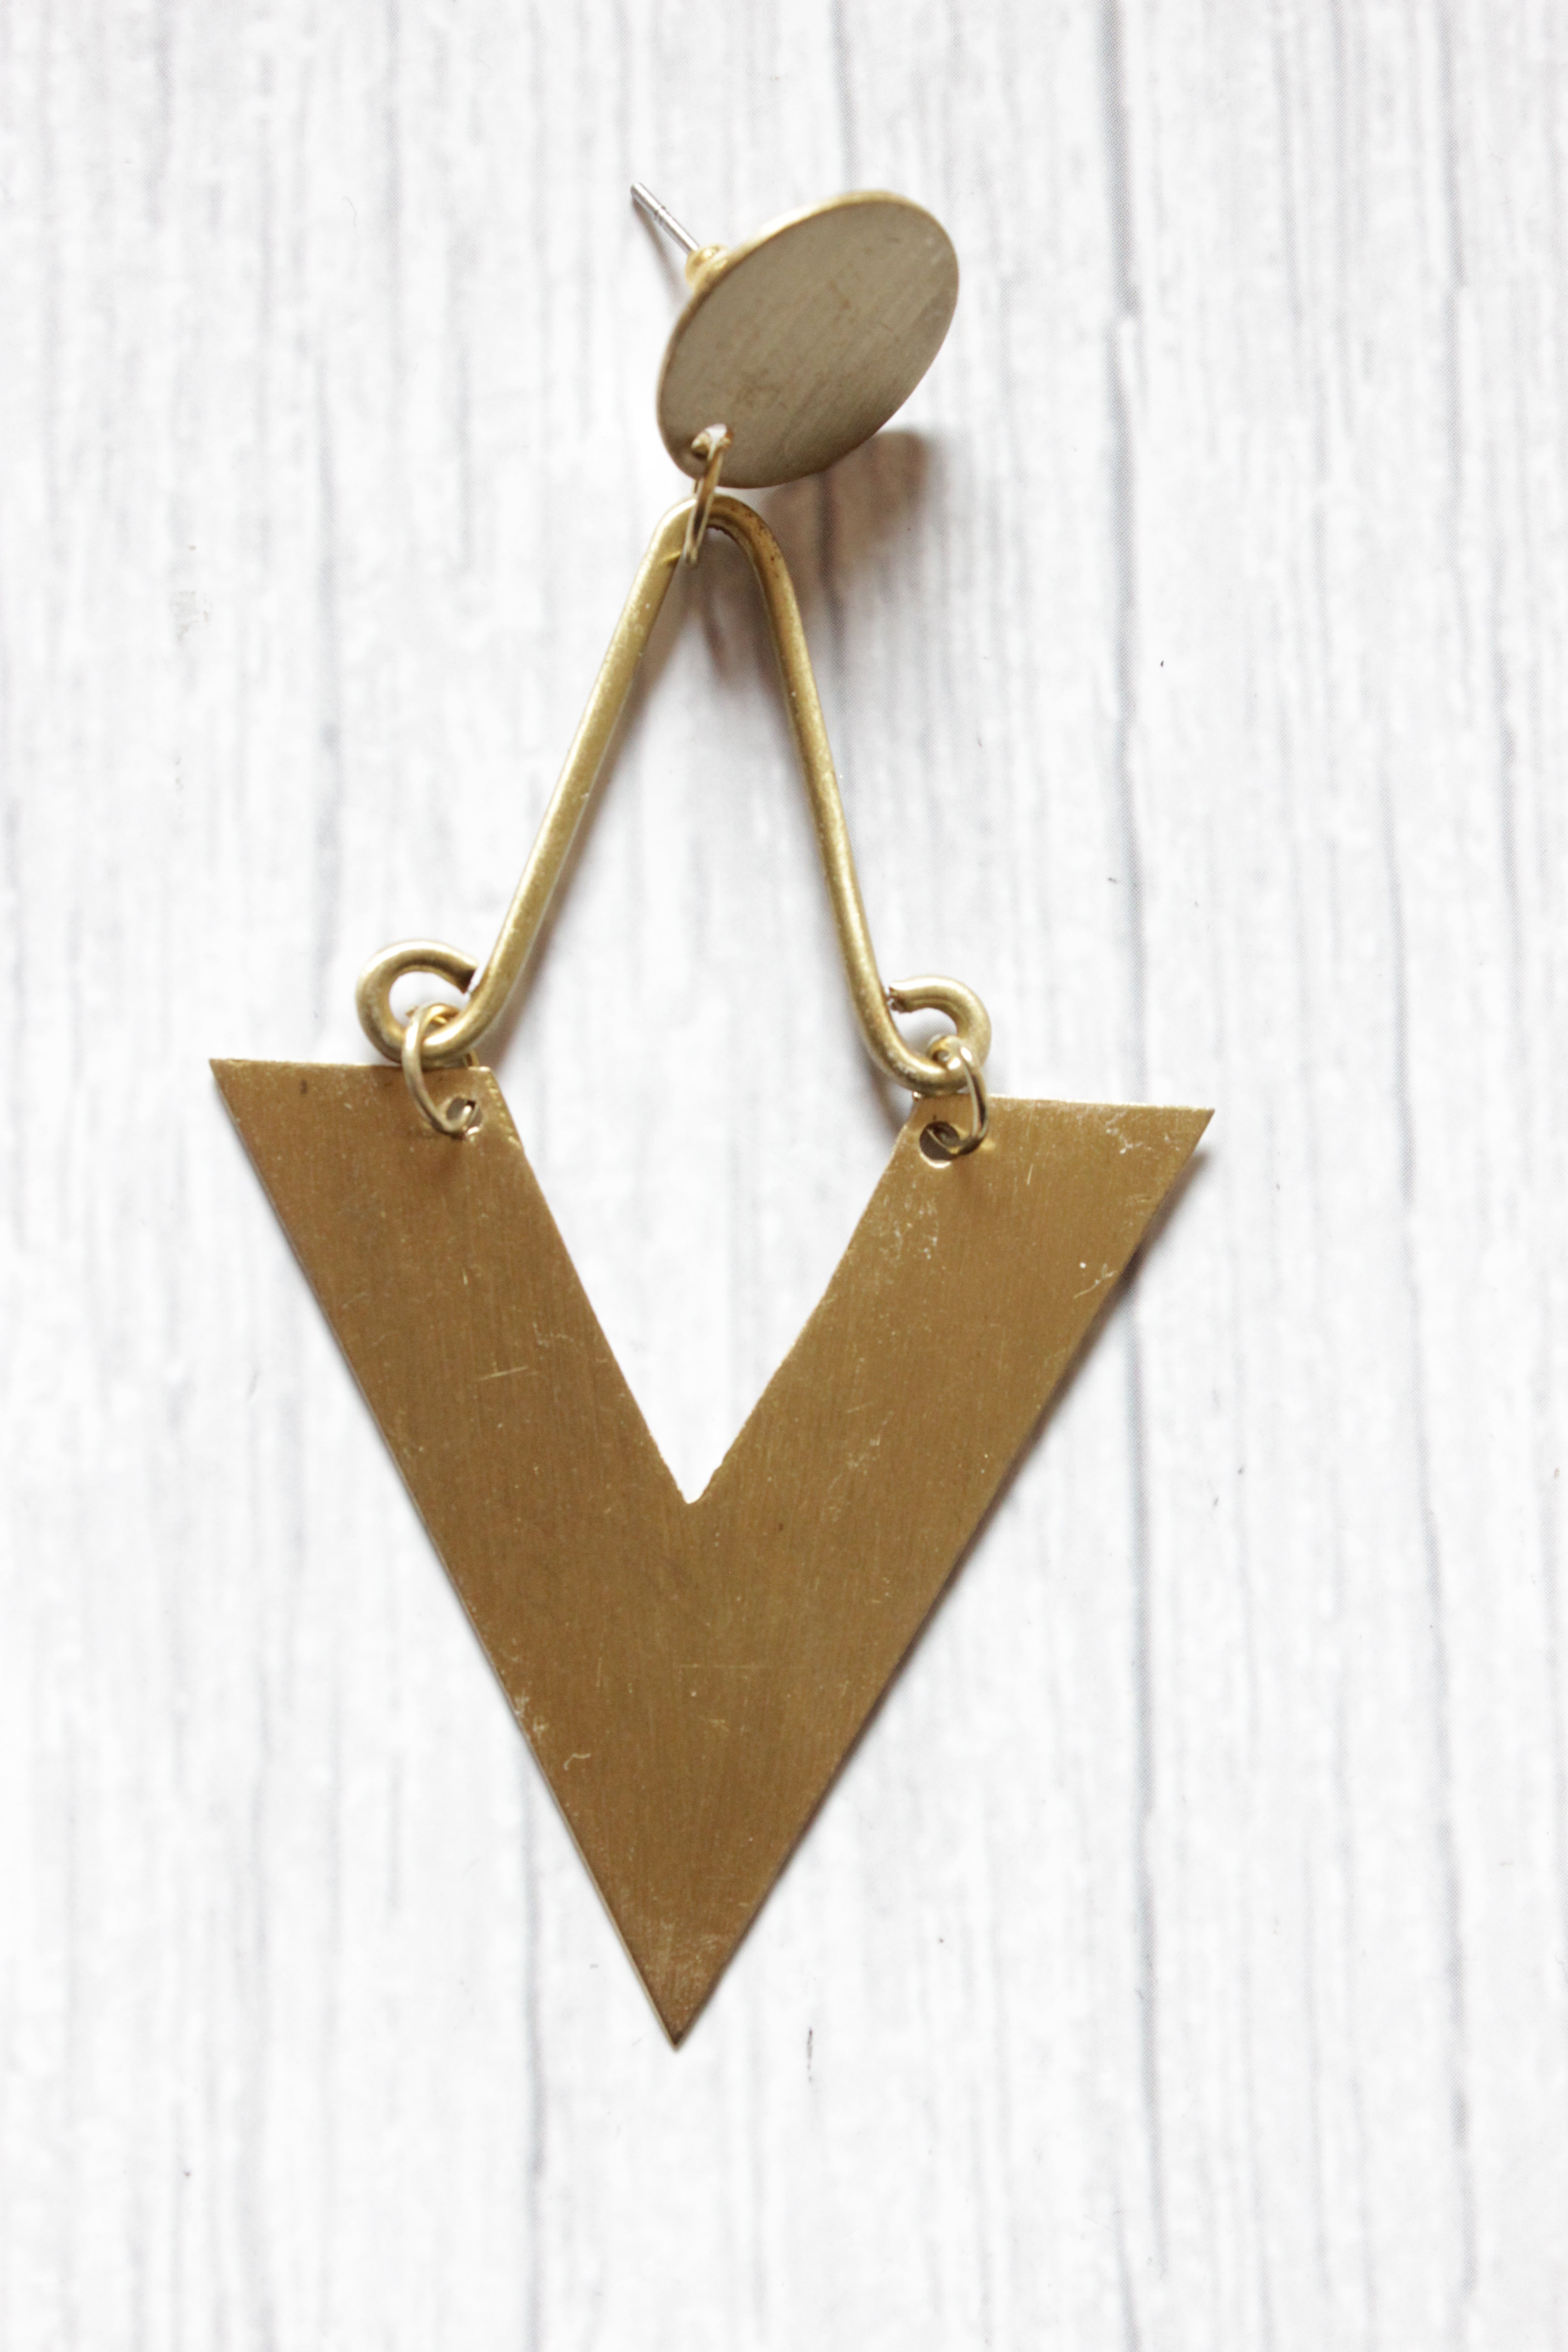 Modern Contemporary Brass Triangular Dangler Earrings